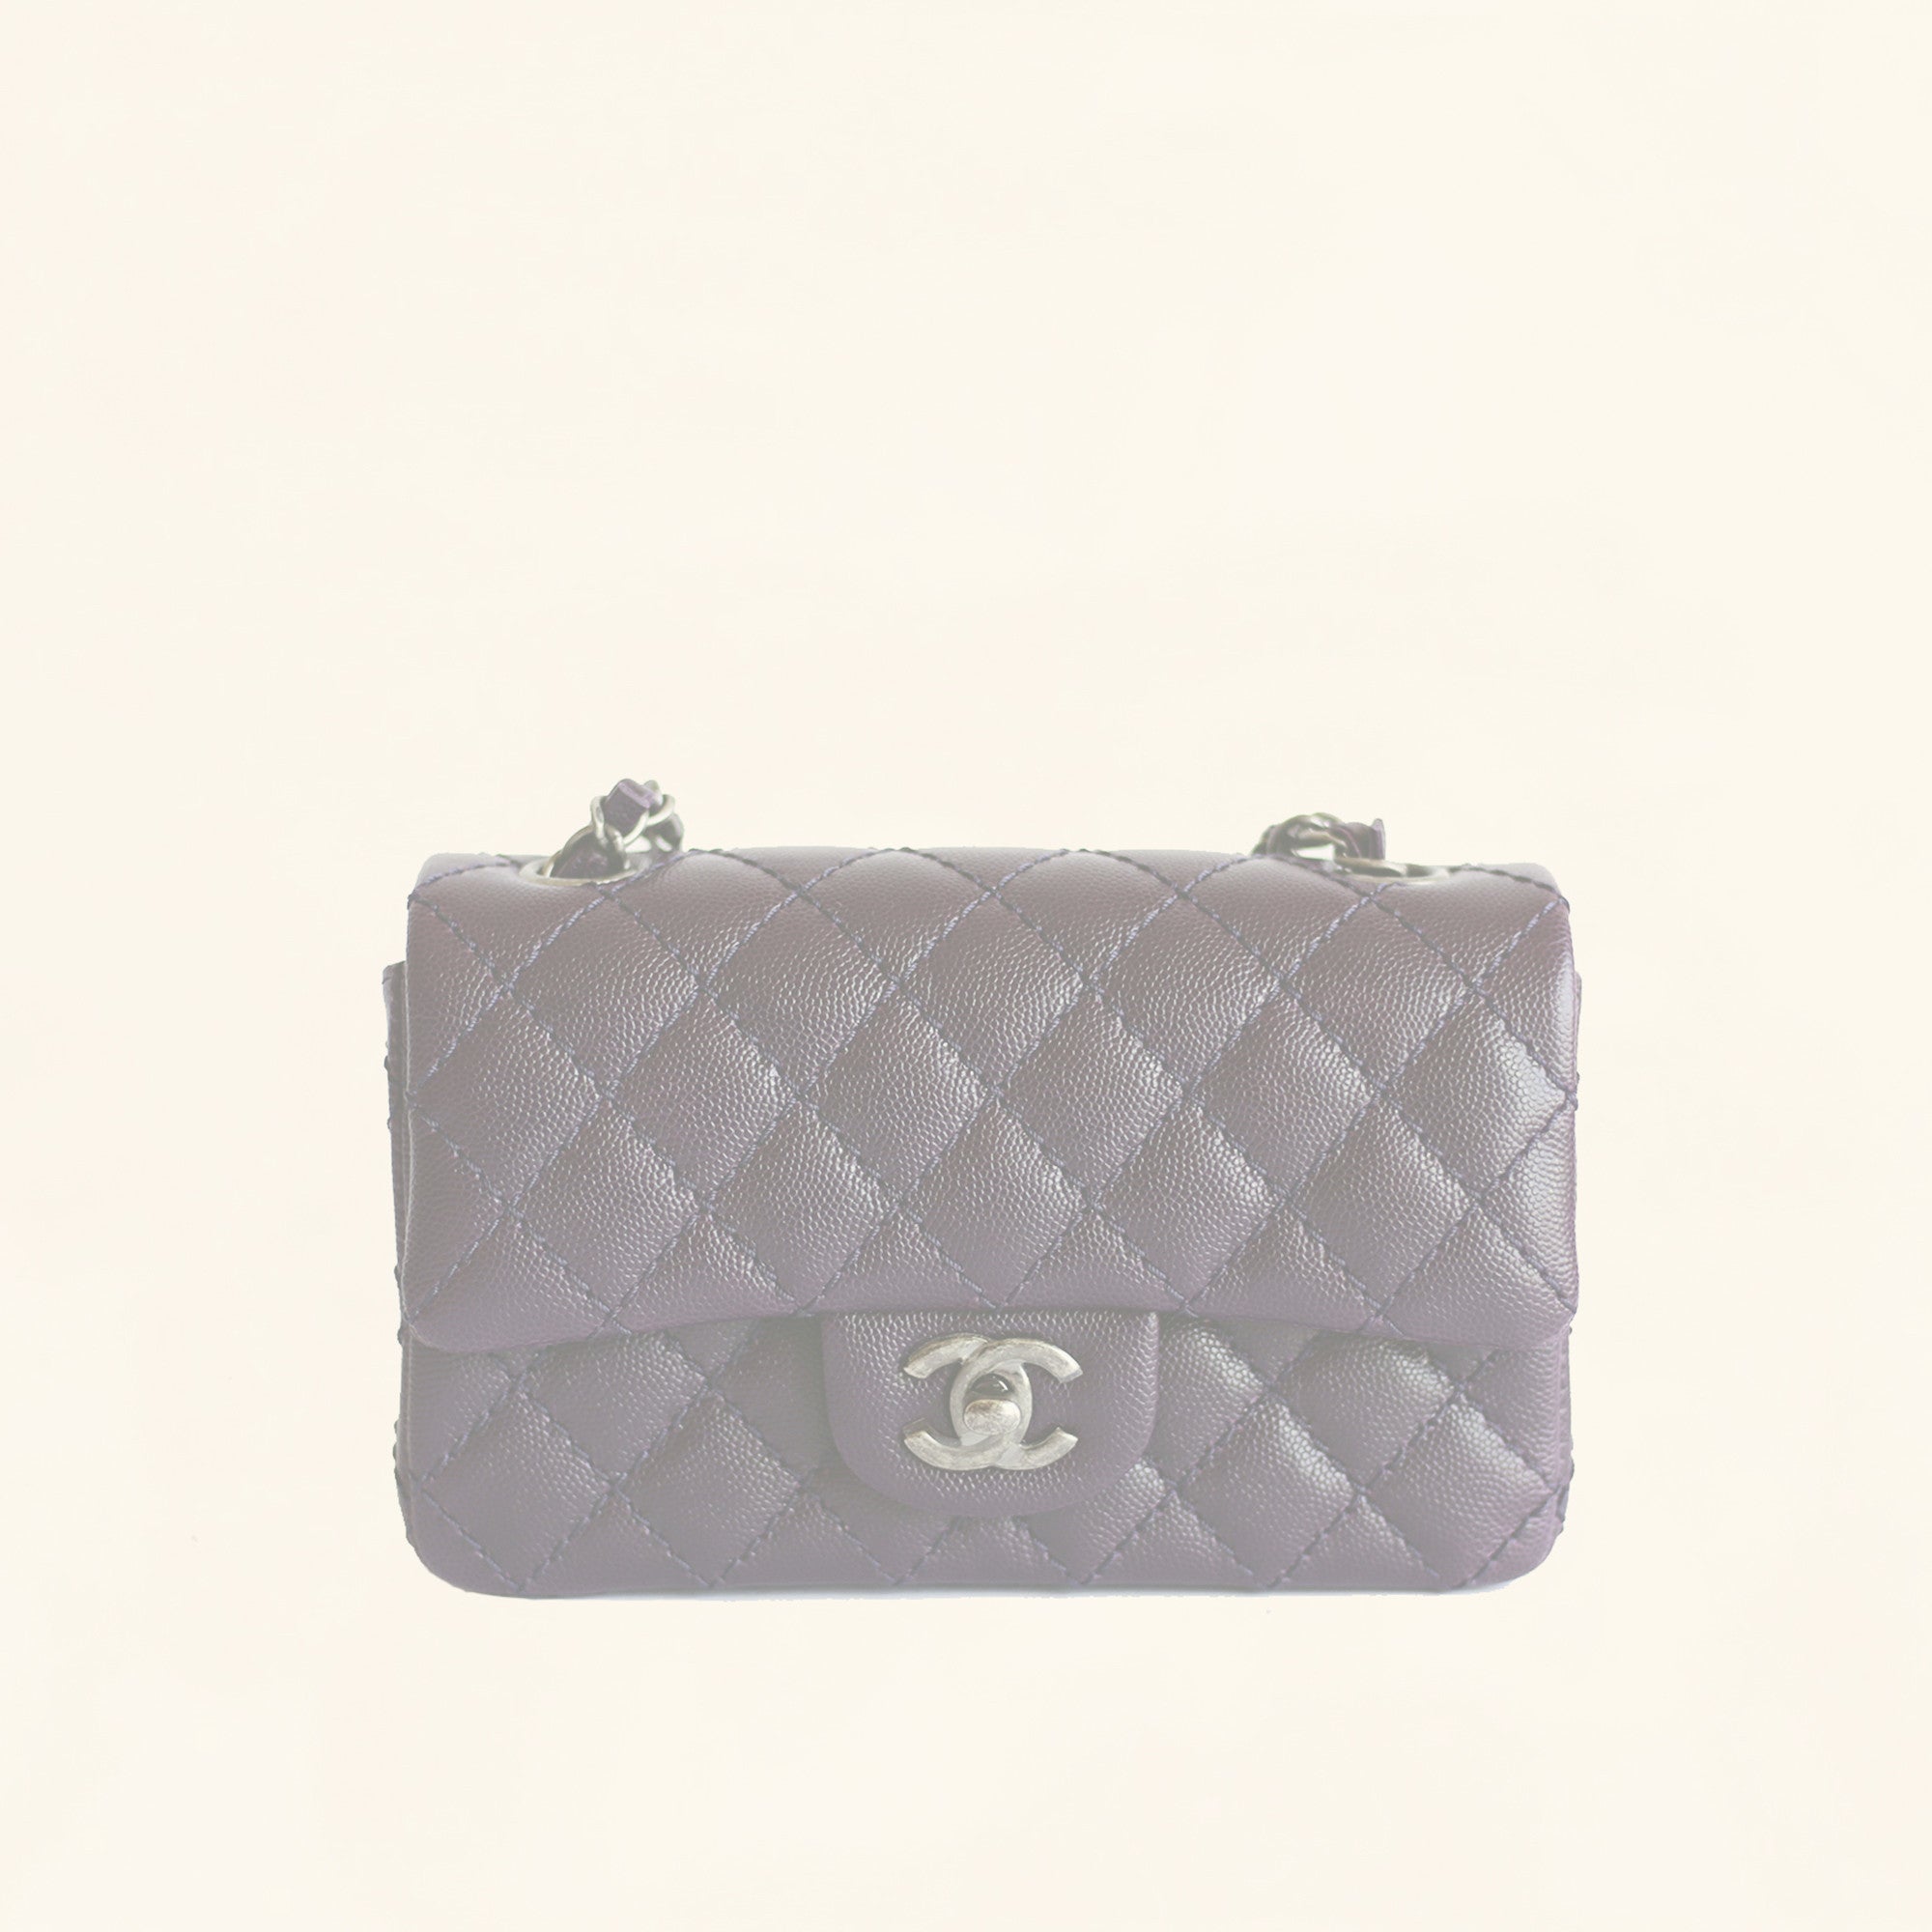 Chanel, Caviar Rectangular Classic Flap in Purple